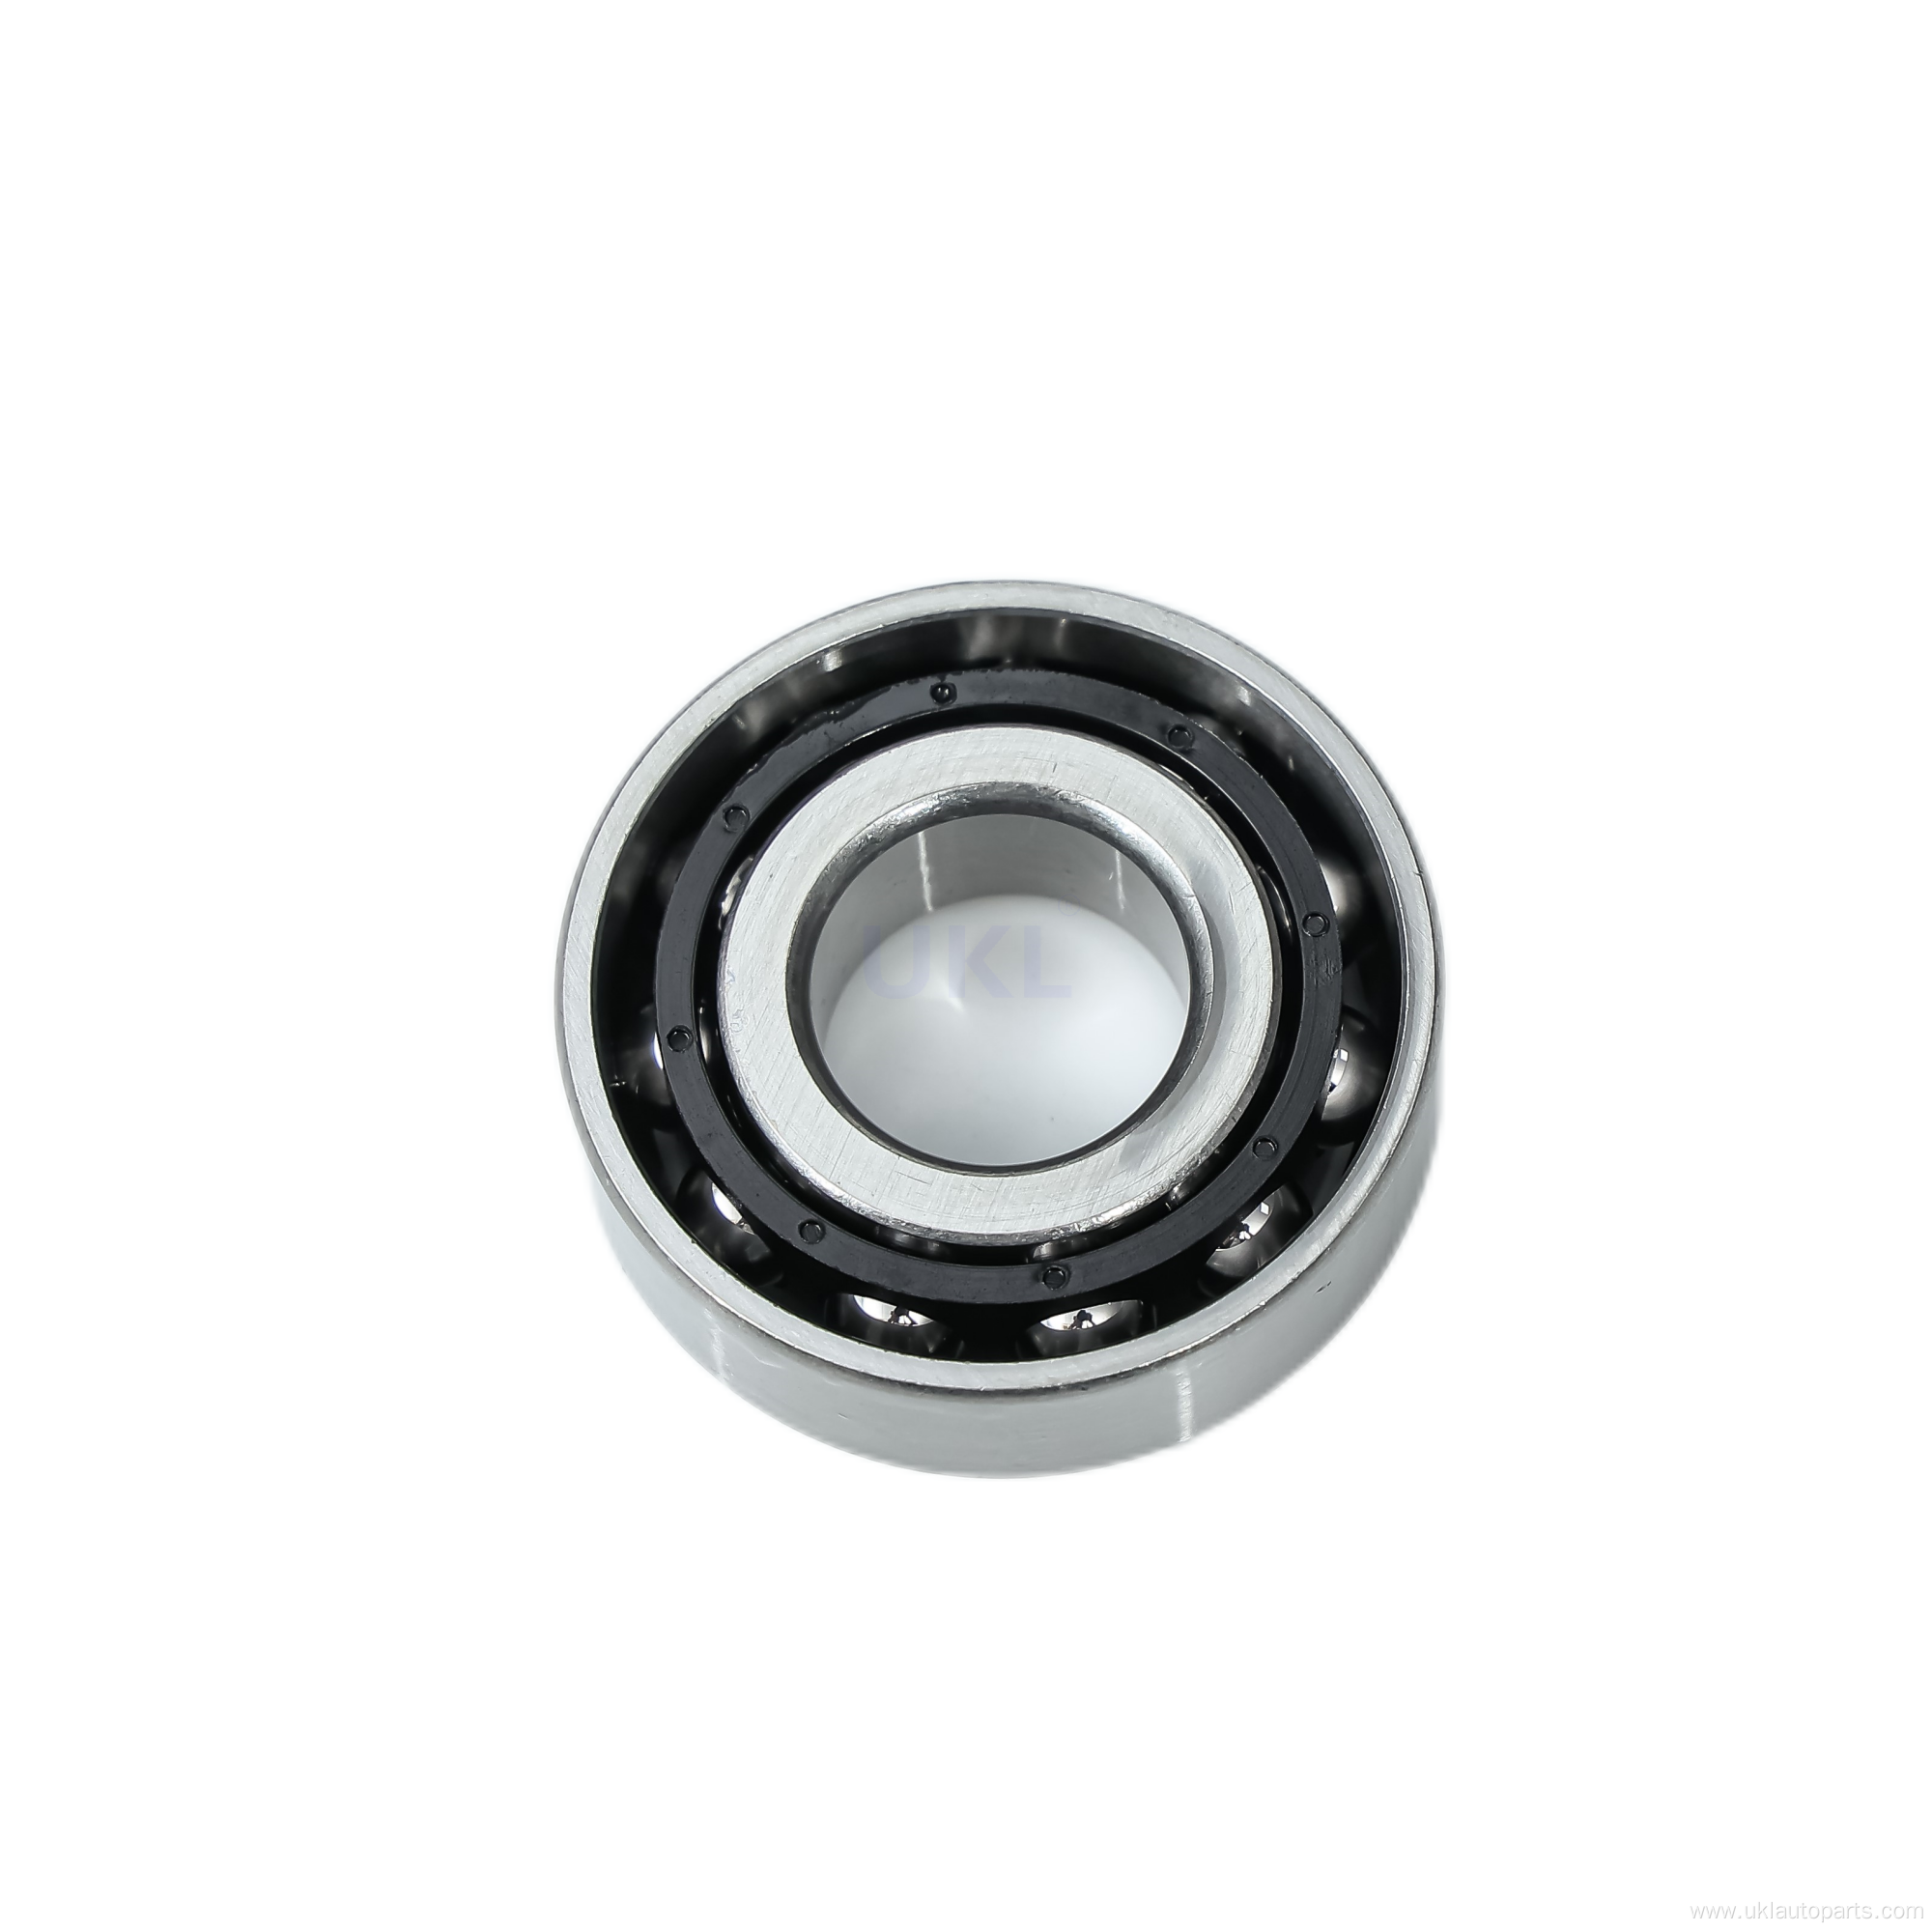 QJ 215 216 217MA angular contact ball bearing